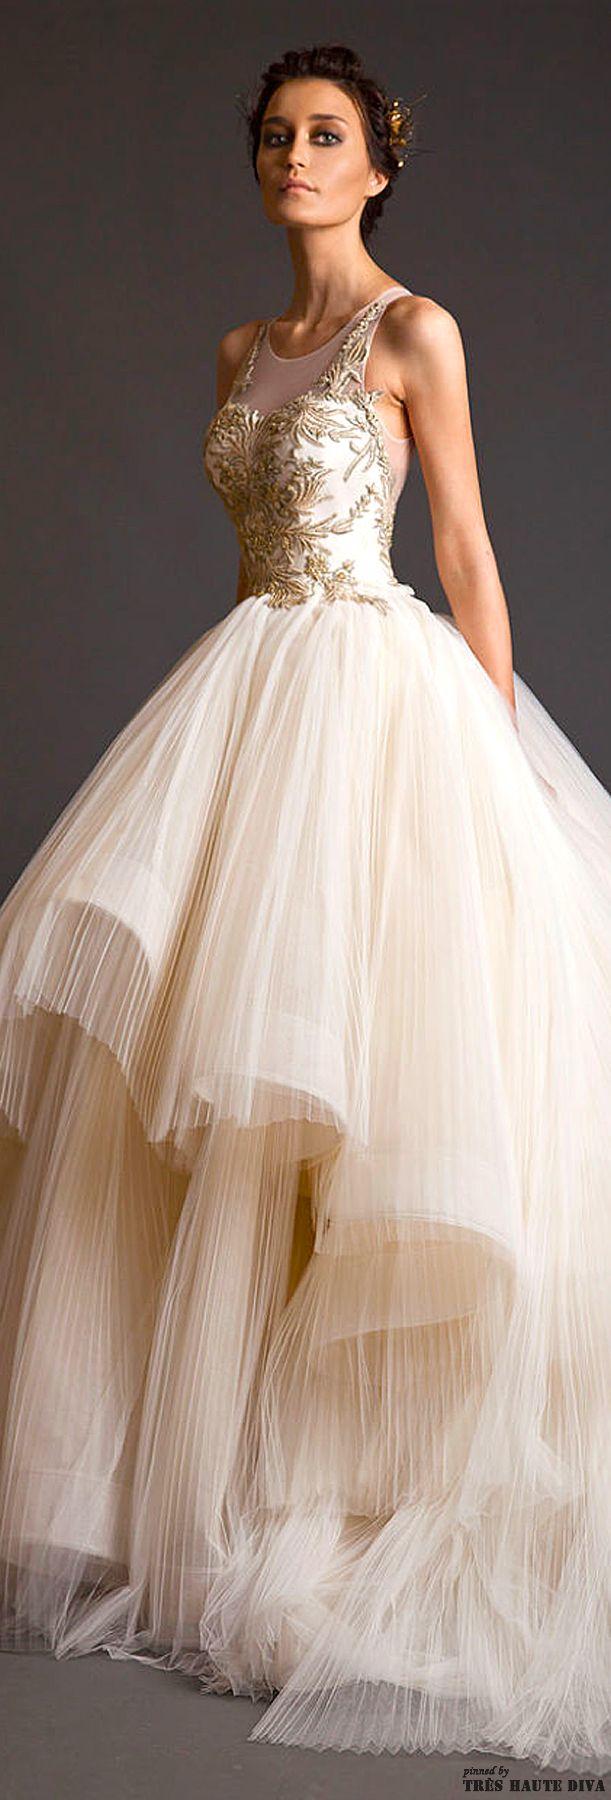 زفاف - Stunning Dresses To Try On:)